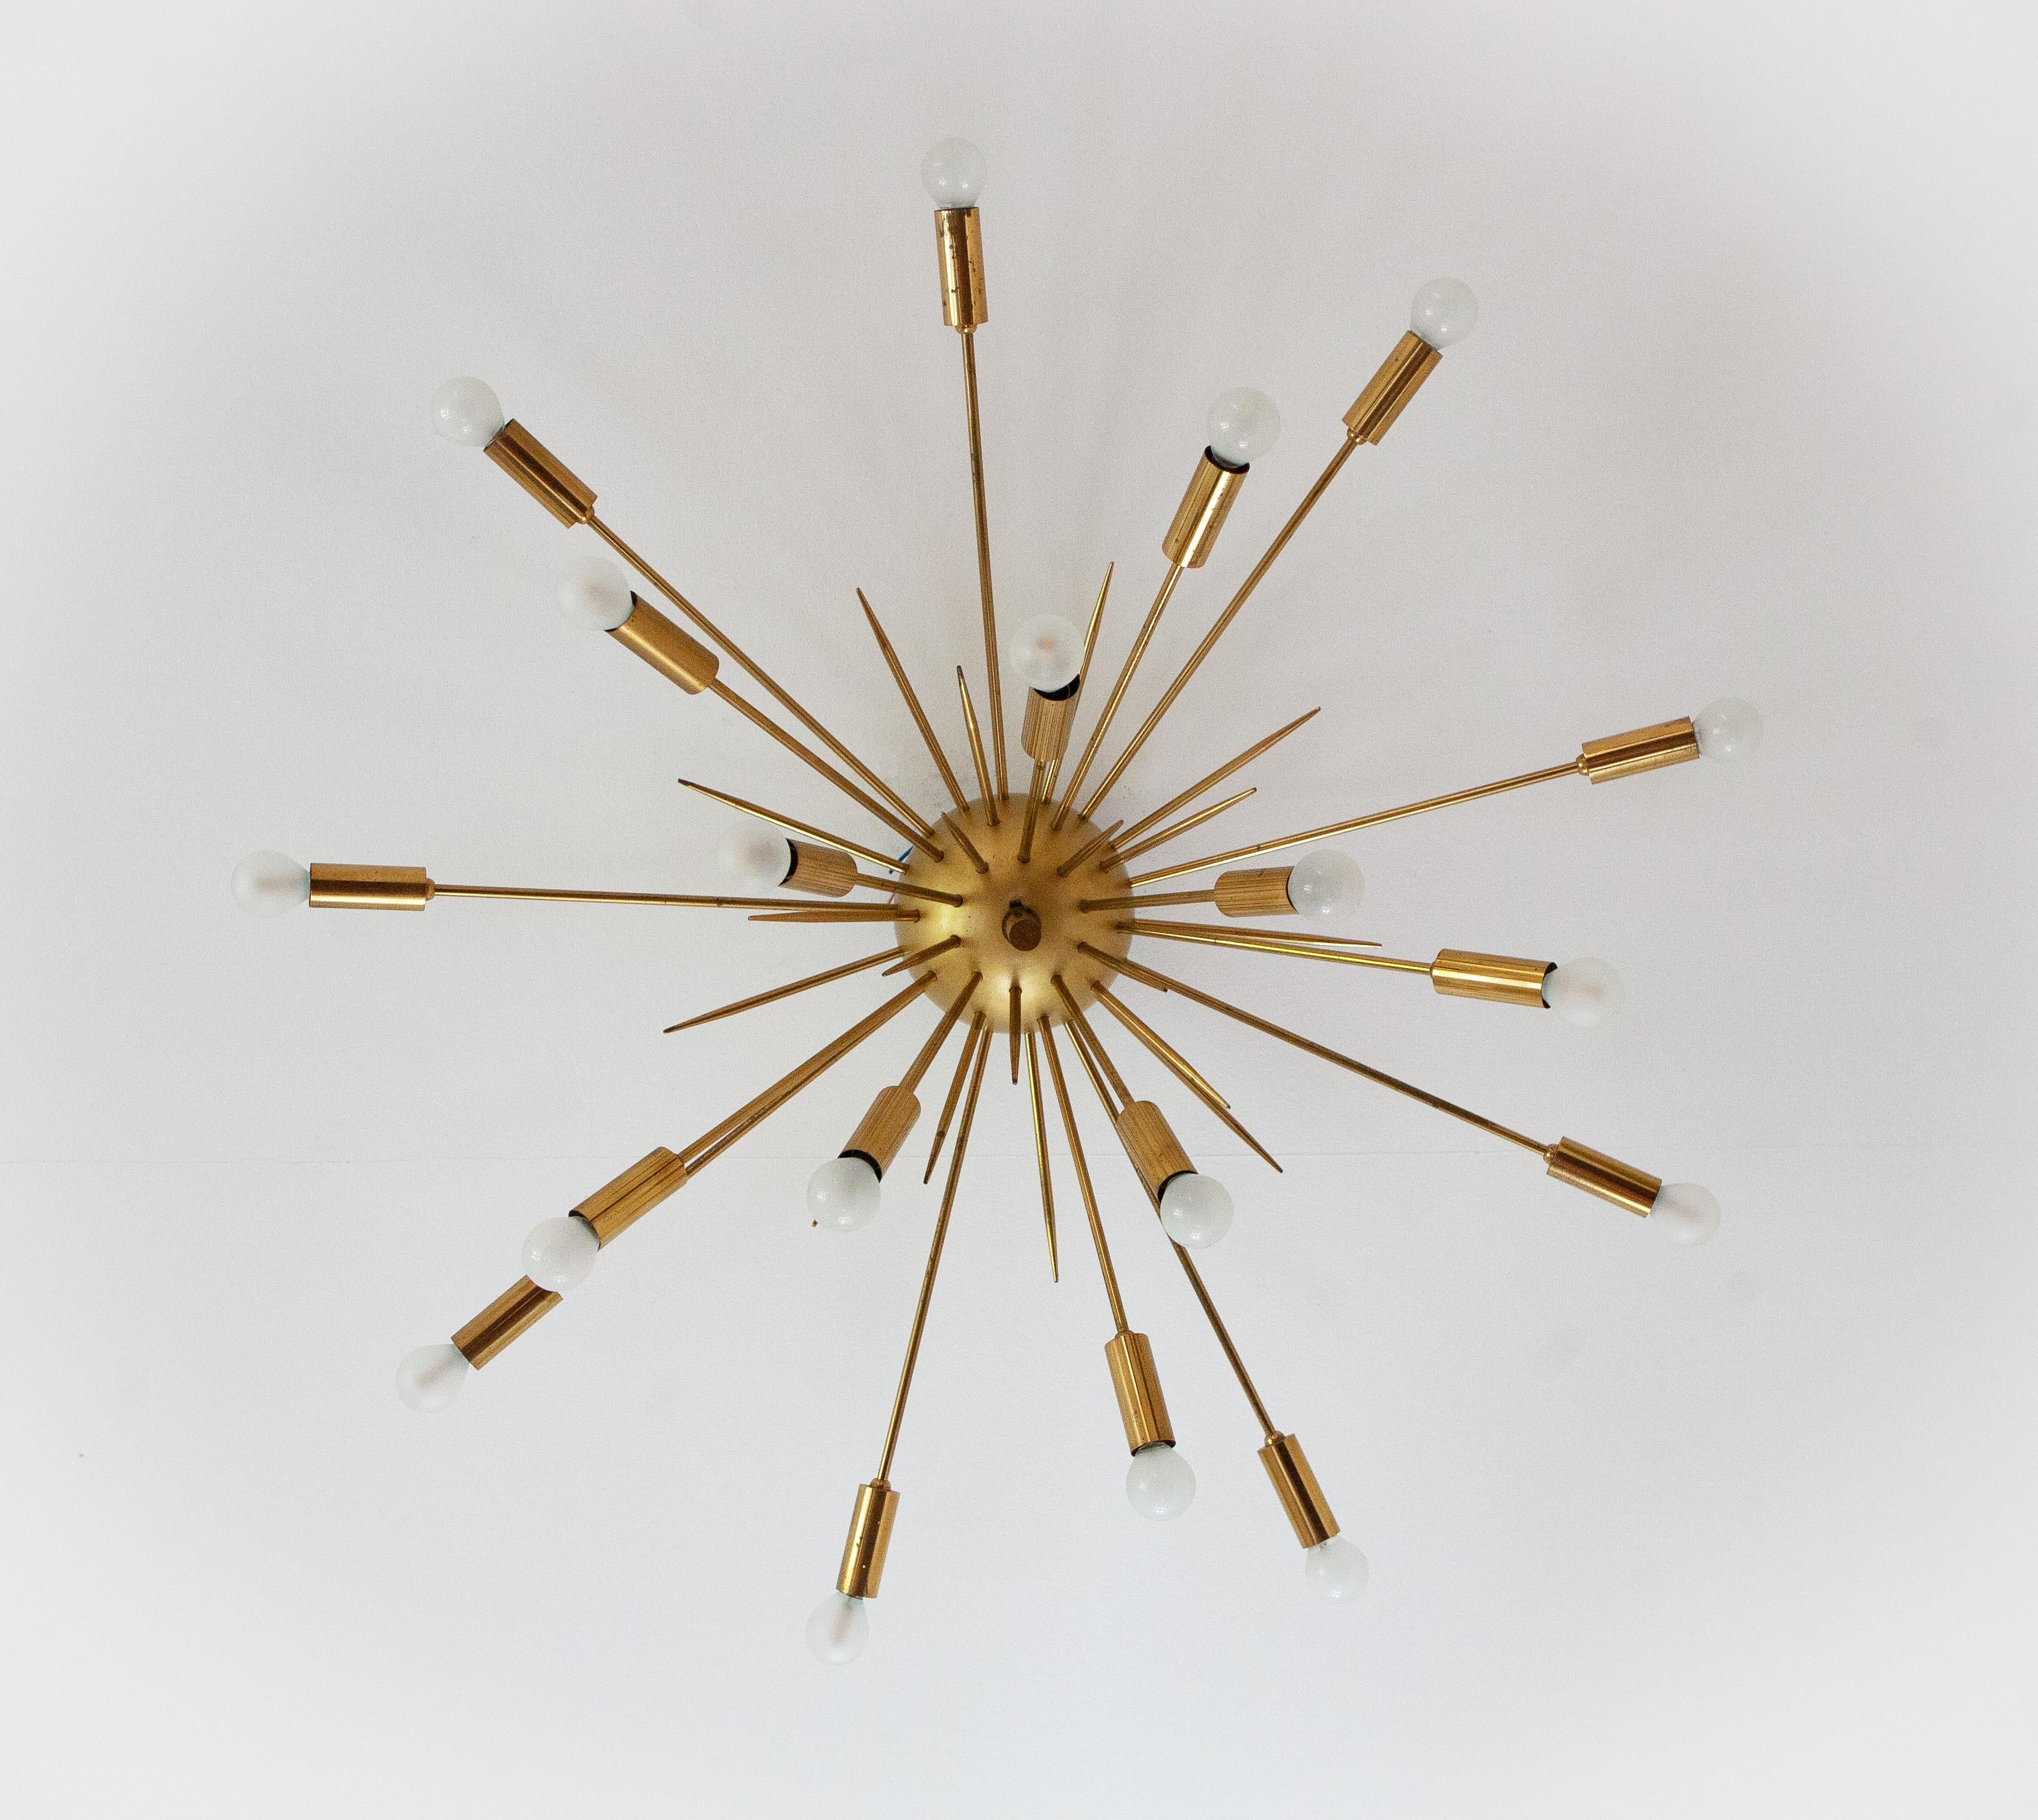 Sputnik model chandelier
Made of brass with 19 lights
1950s production for Stilnovo
Bulbs: 19 E14 6w, 2700k
